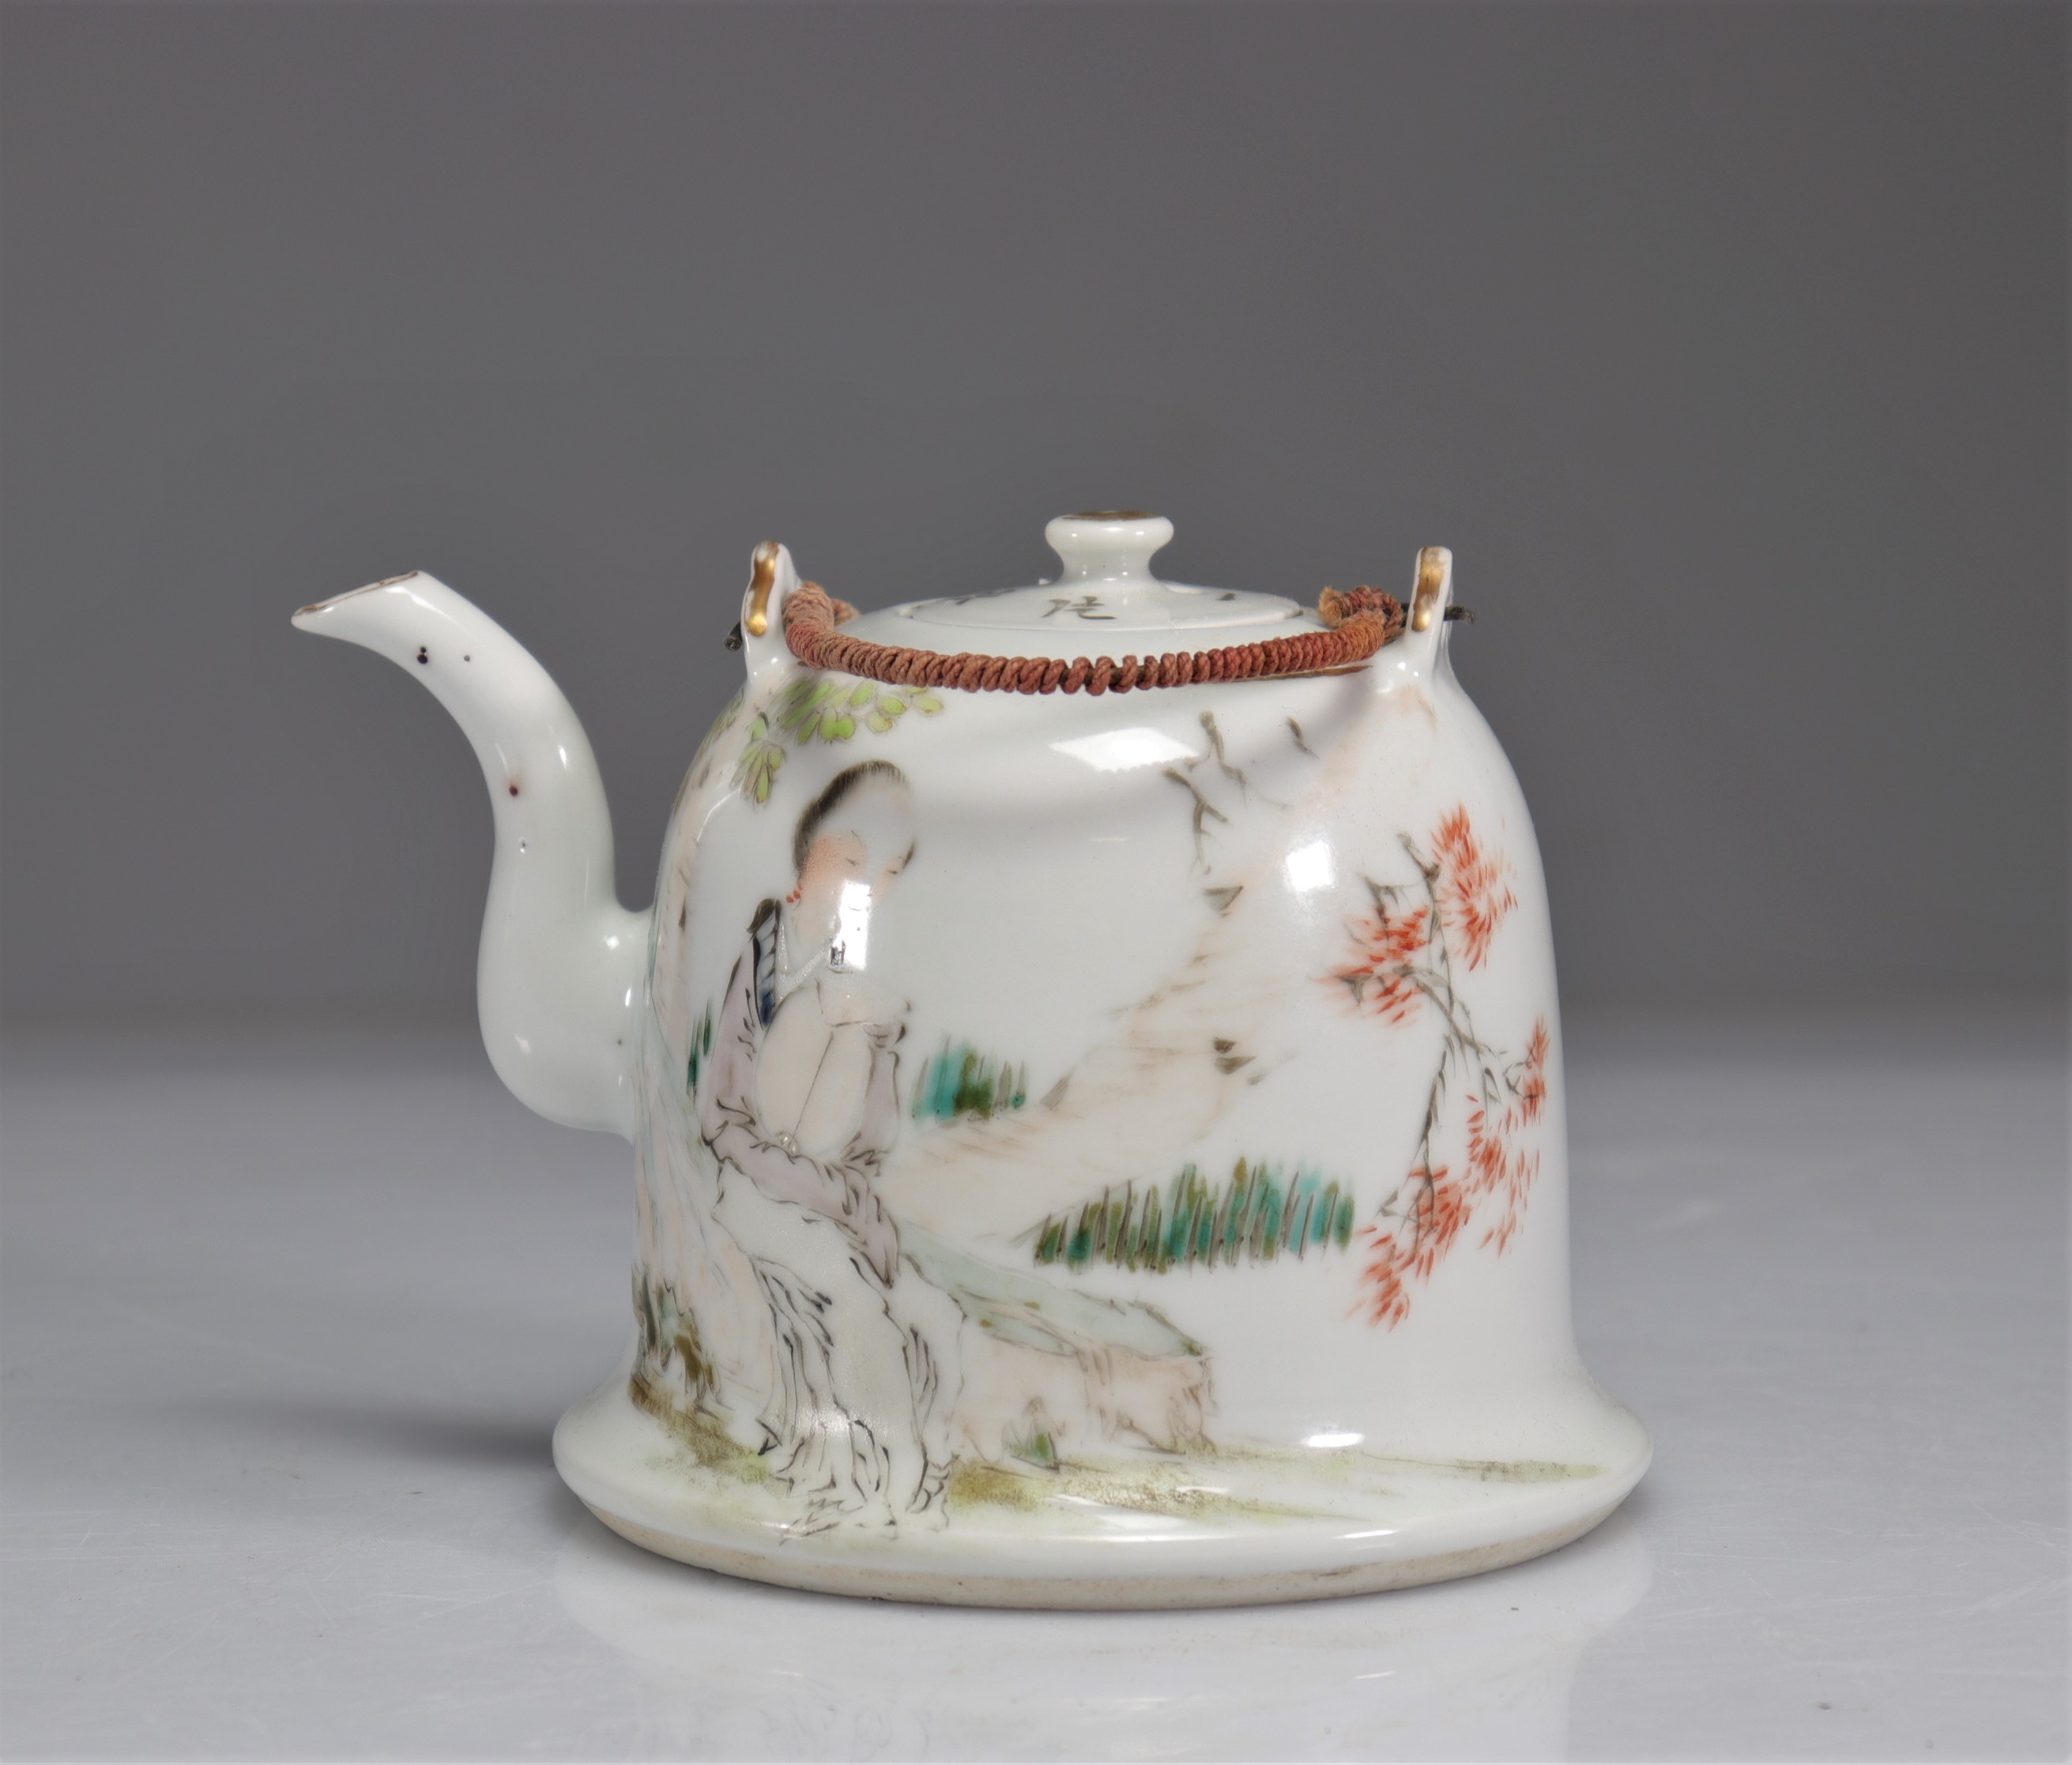 Lot (5) porcelain famille rose teapot and bowls - Image 2 of 4